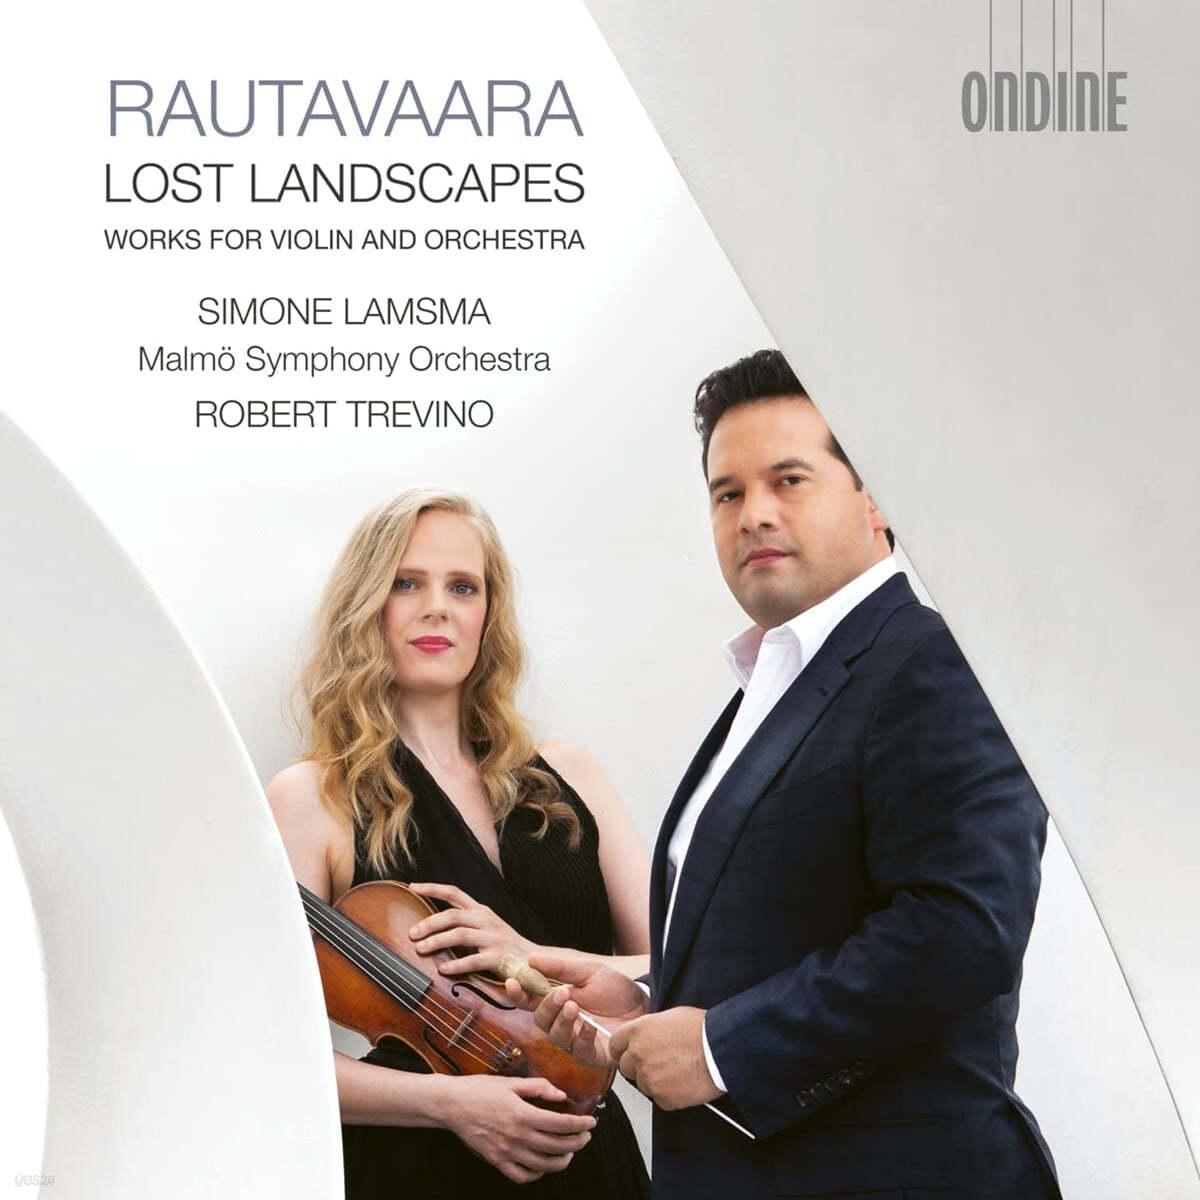 Simone Lamsma 라우타바라: 바이올린과 관현악을 위한 최후의 작품들 (Rautavaara: Lost Landscapes - Works for Violin and Orchestra) 